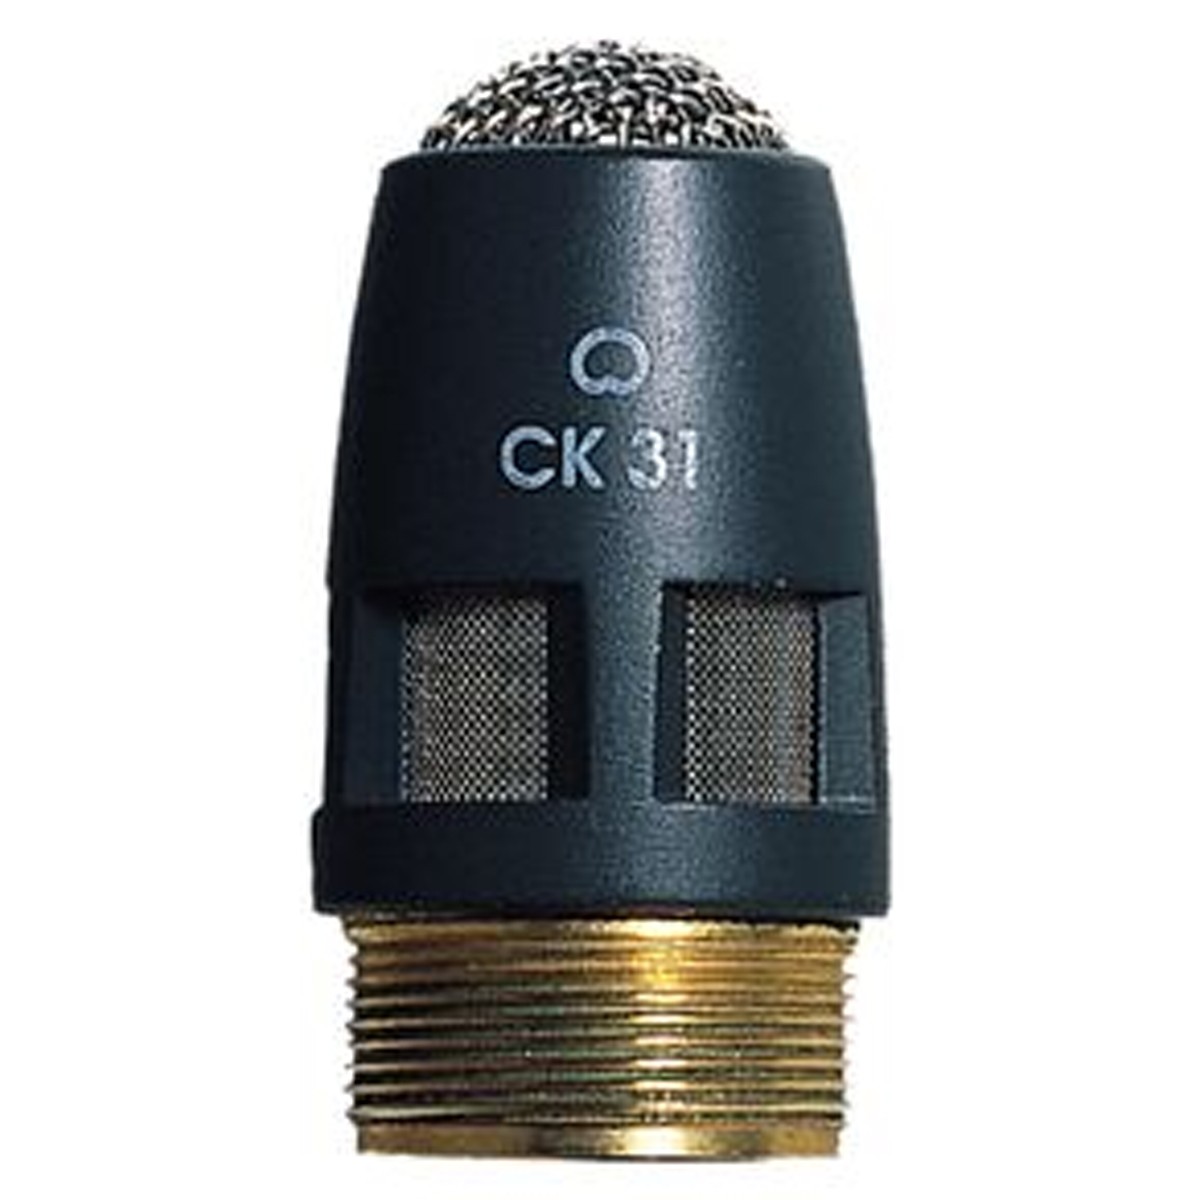 Kit HM1000 + Capsula CK31 - Microfone para coral, teatro AKG